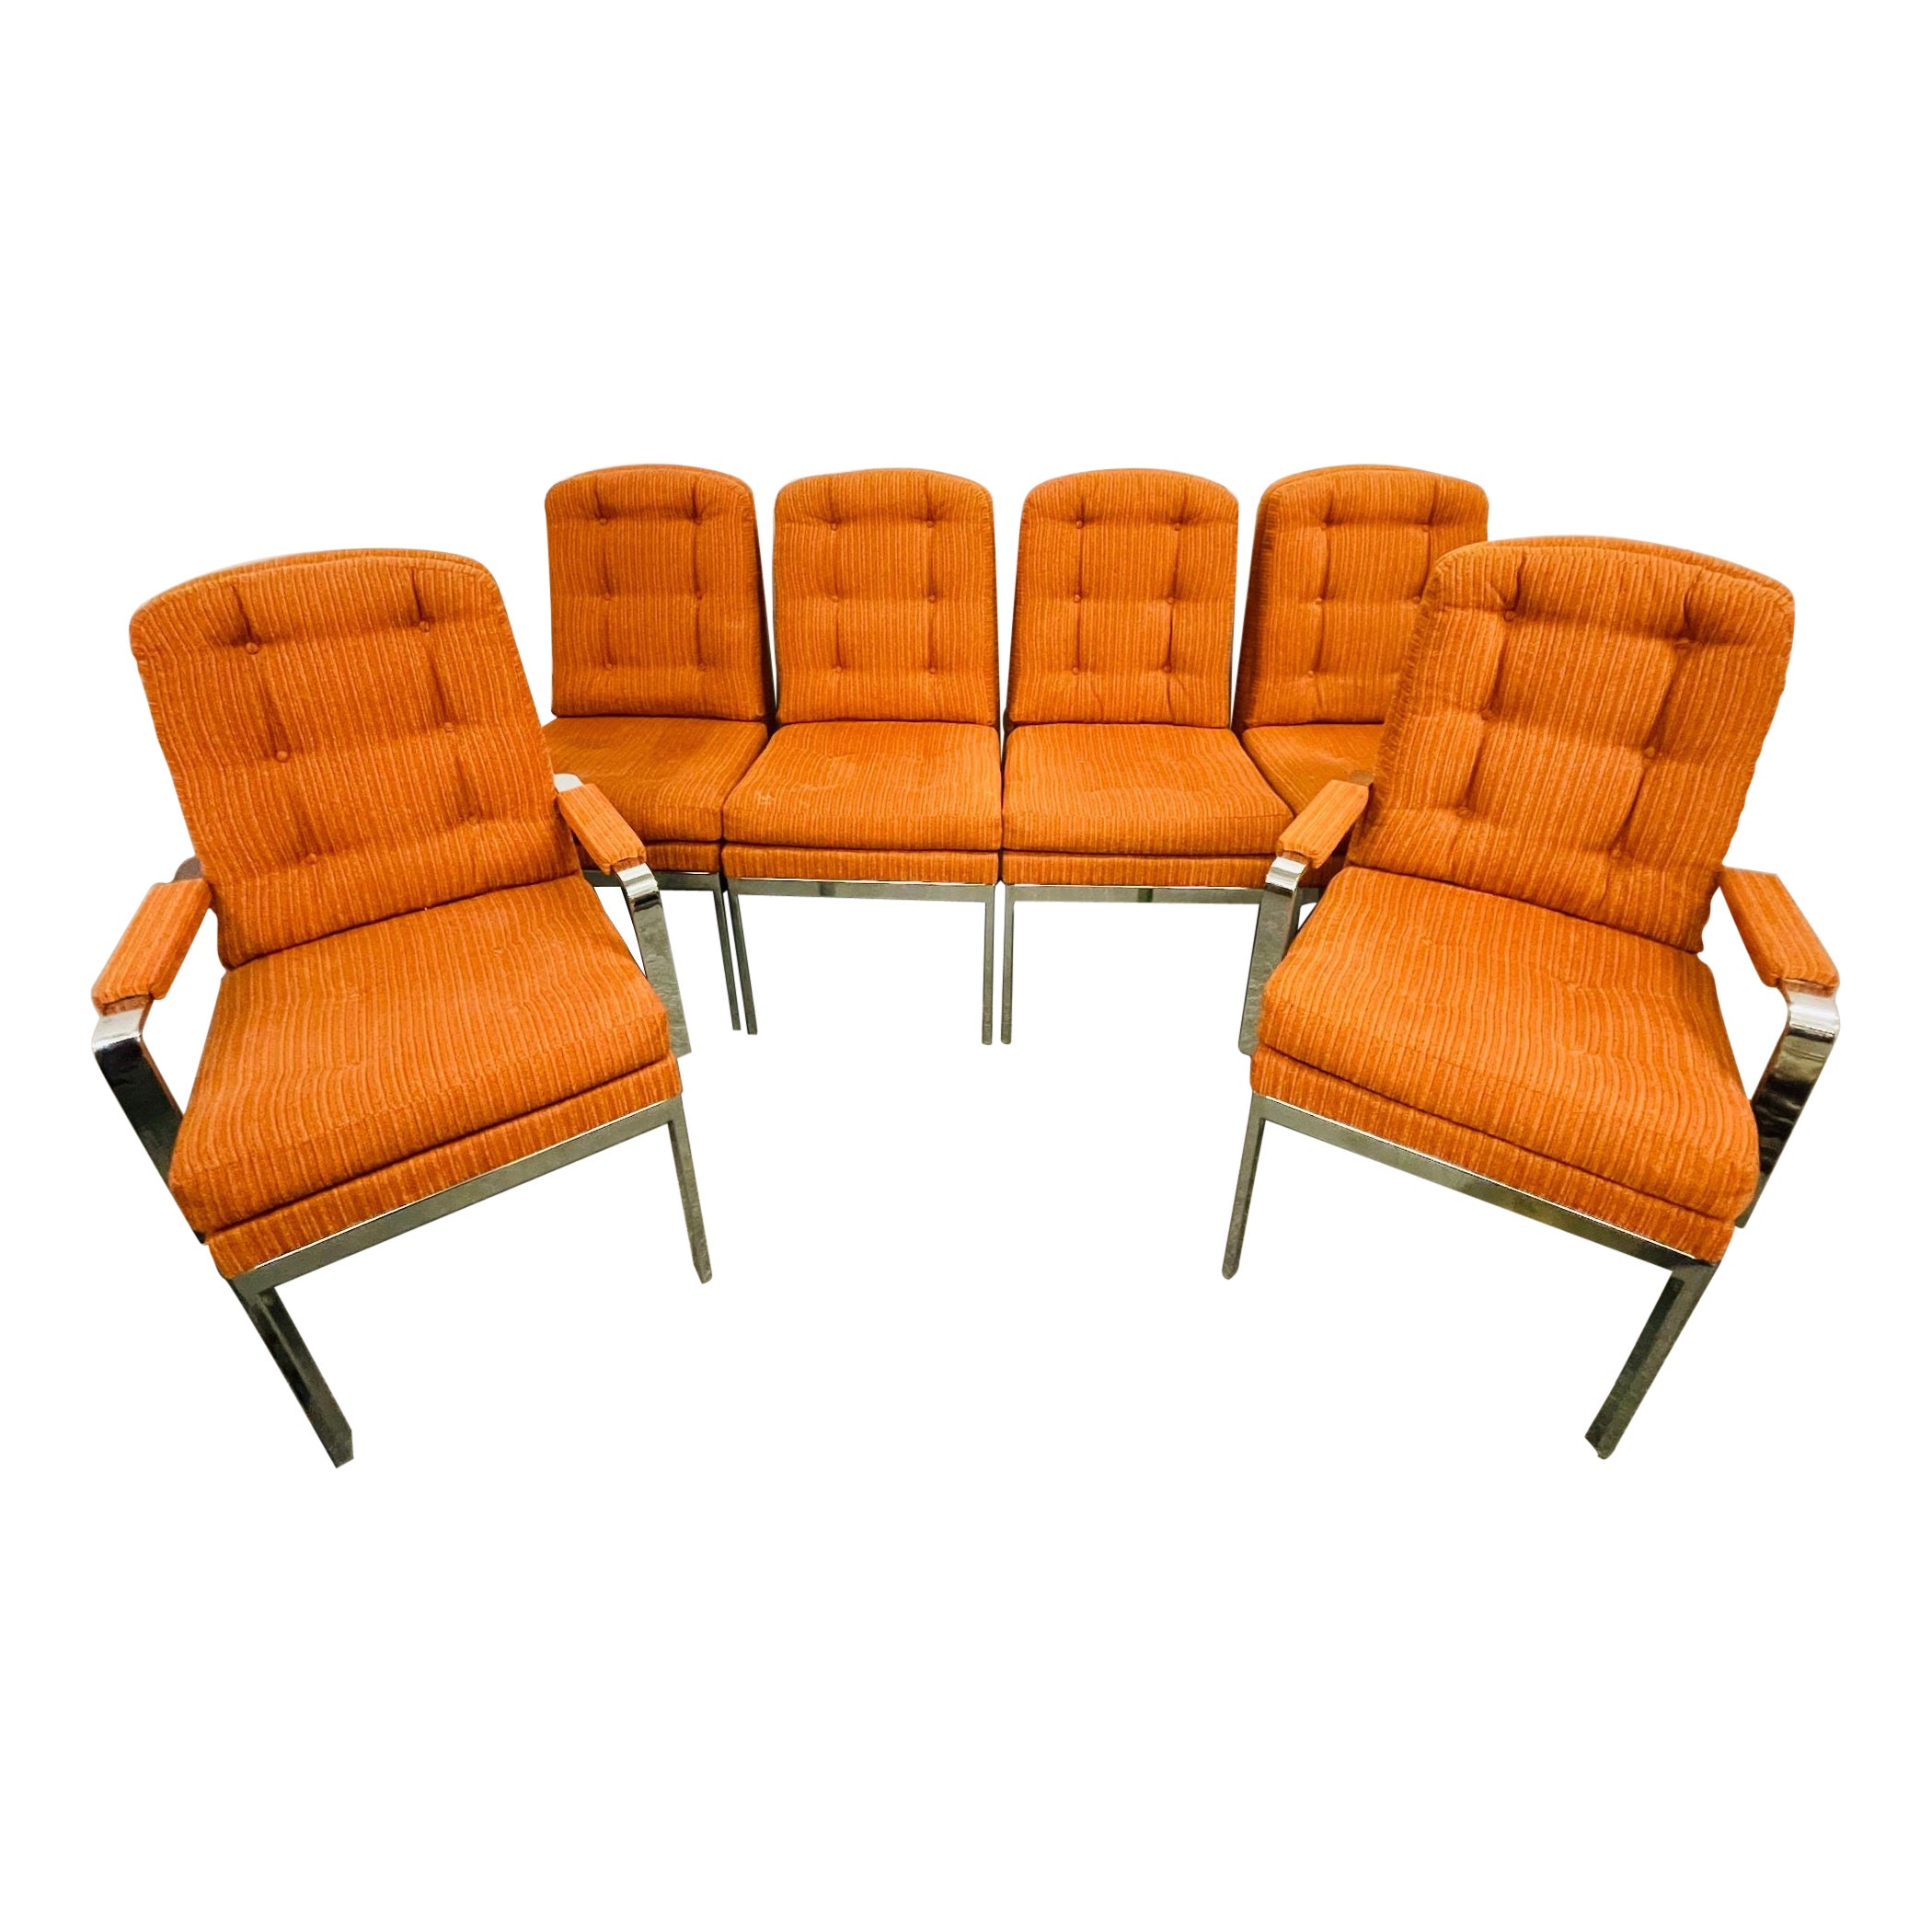 Set of Six Mid-Century Modern Dining Chairs, Milo Baughman Style, Chrome, Fabric